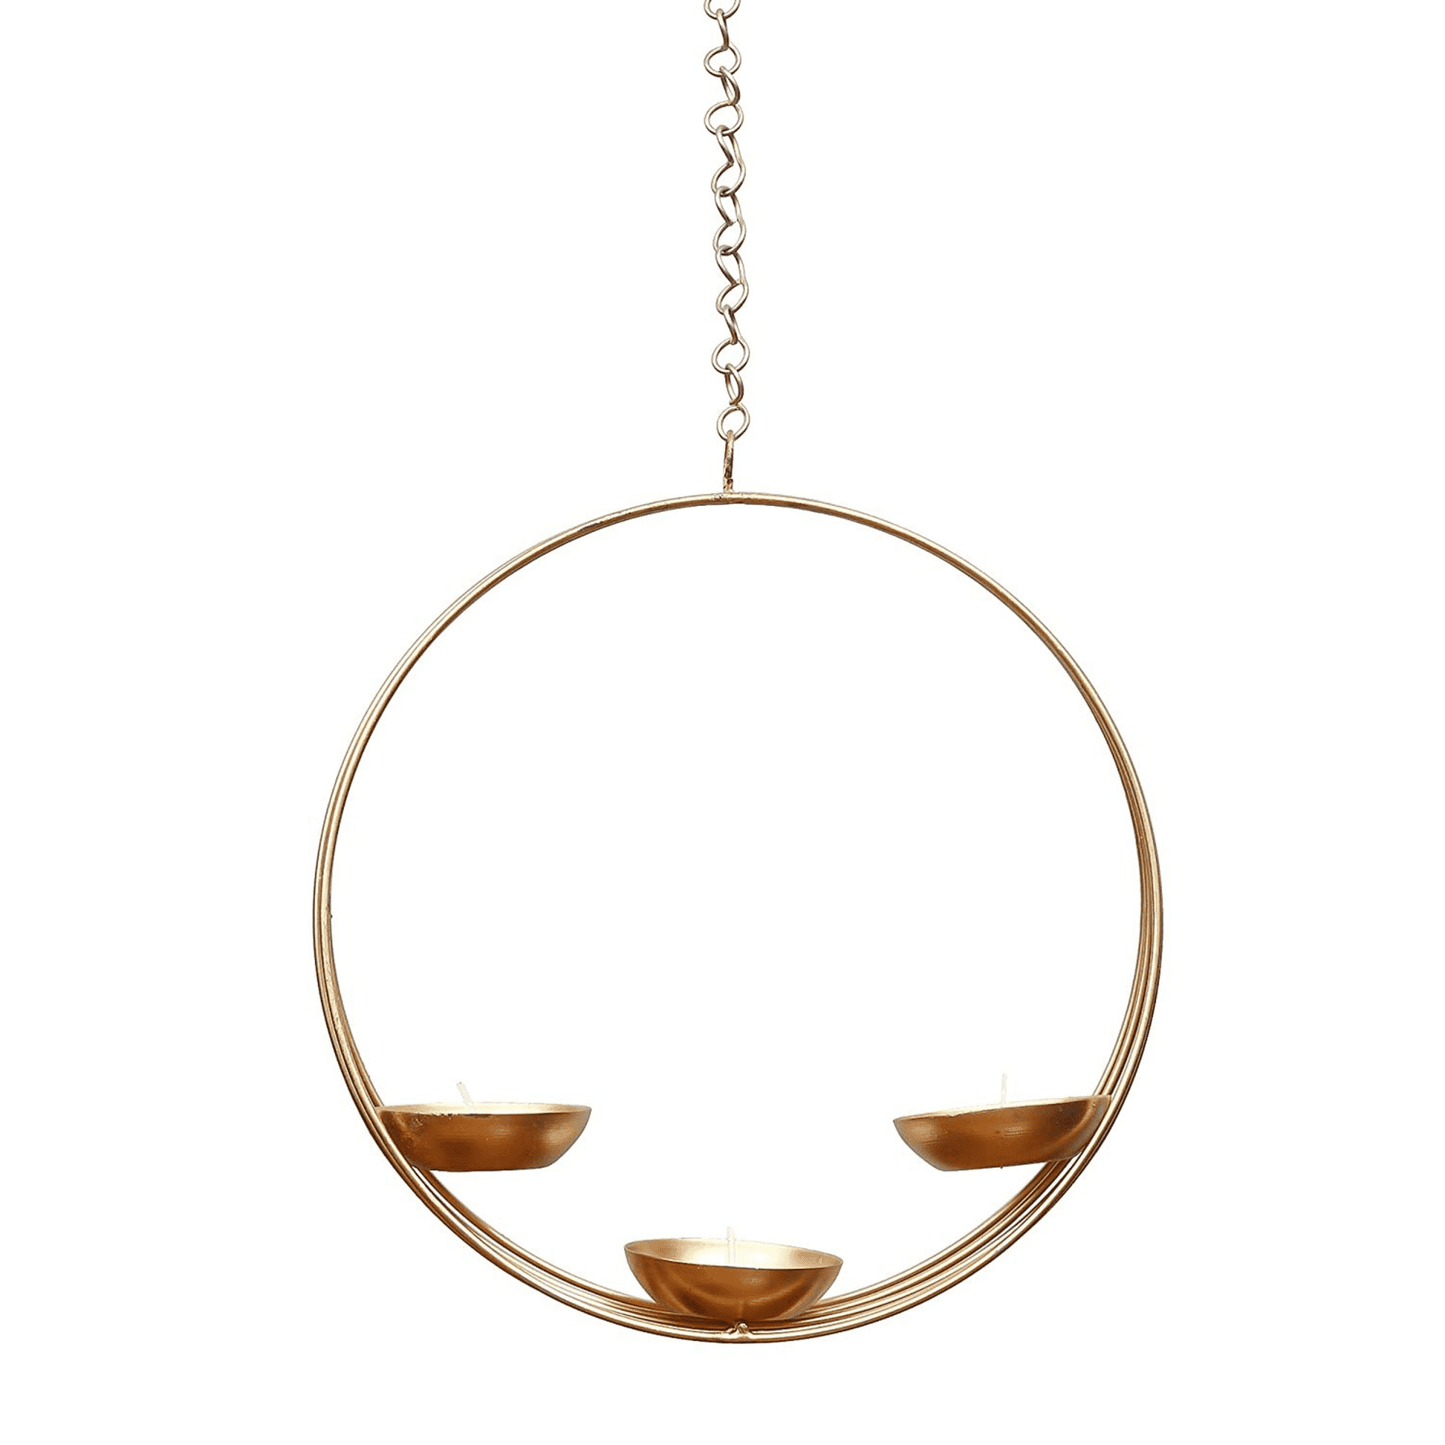 Buy Unique Decorative Hanging Metal Tea Light Holder